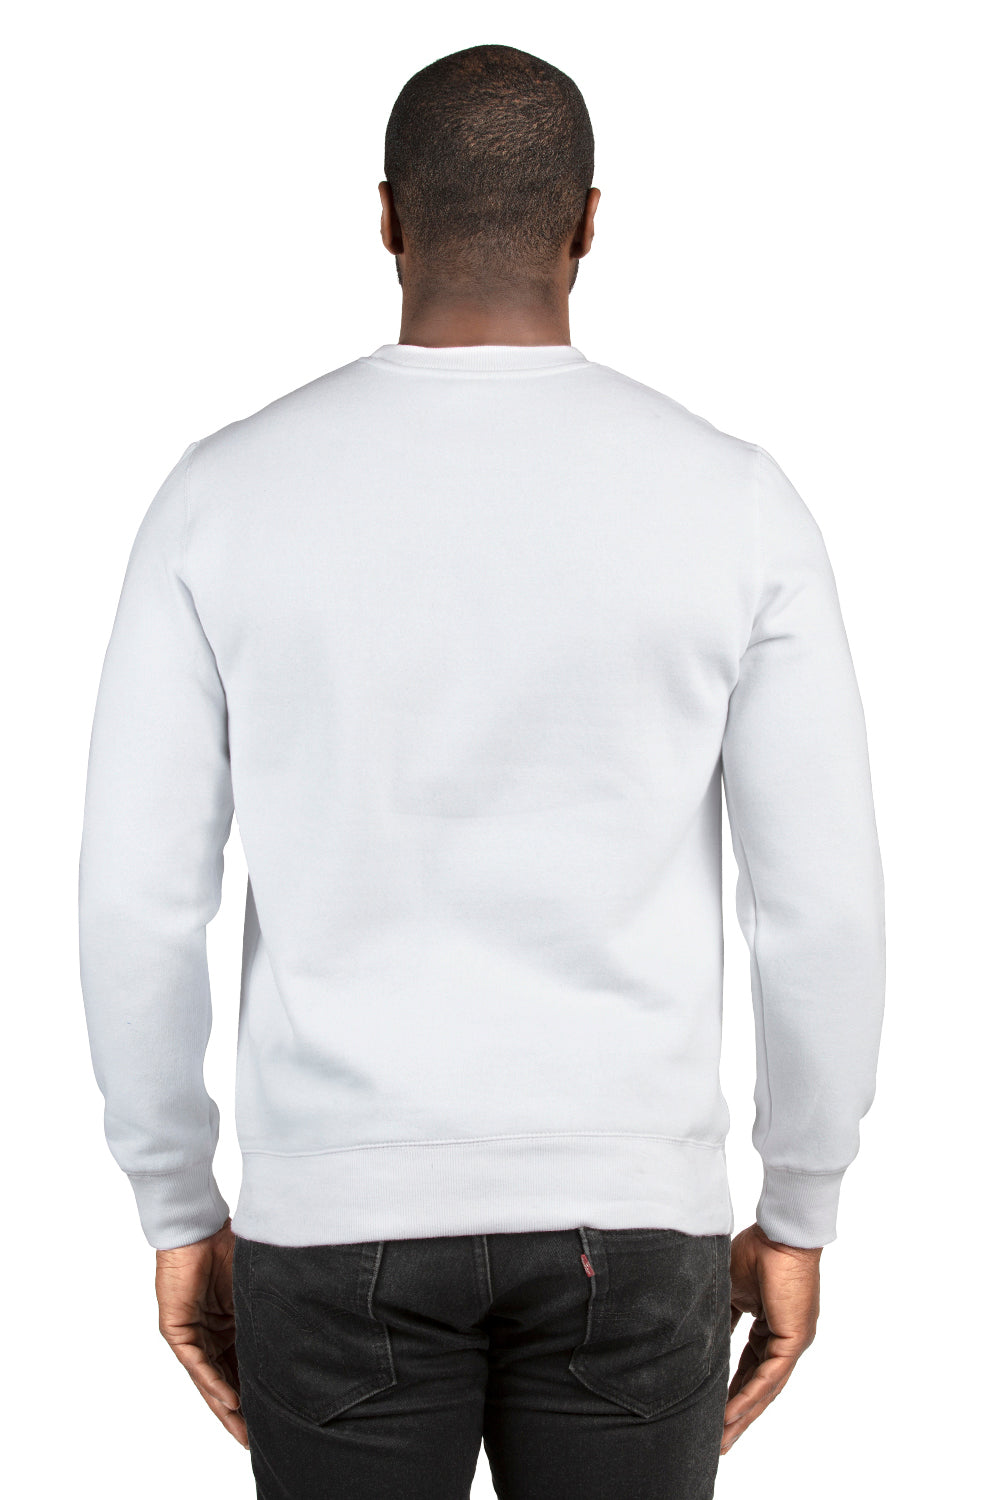 Threadfast Apparel 320C Mens Ultimate Fleece Crewneck Sweatshirt White Back